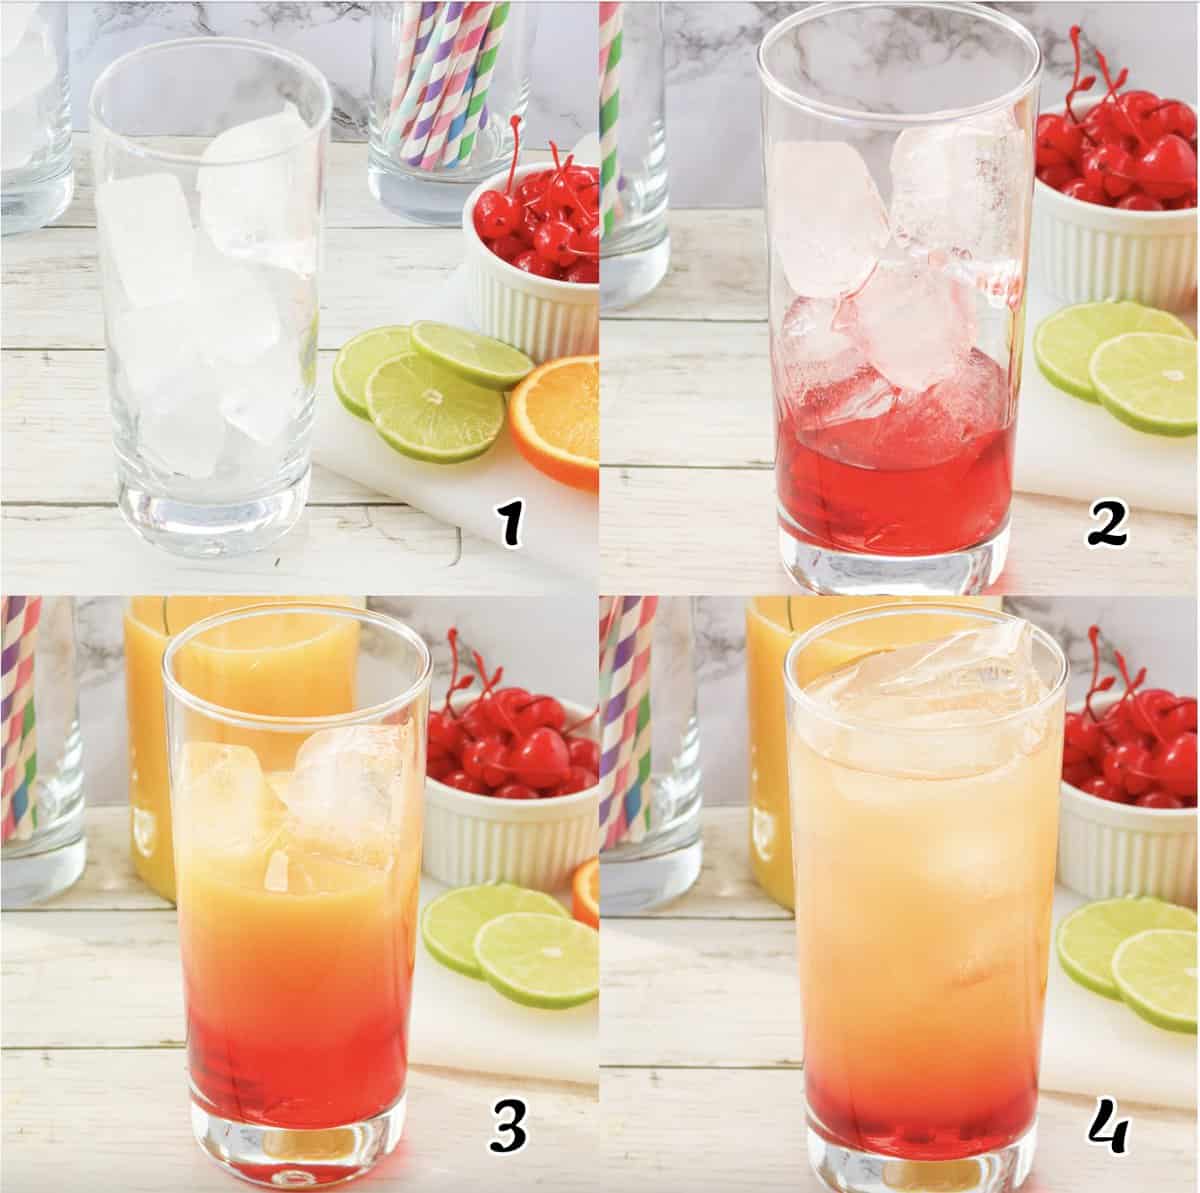 First, the ice, then grenadine, orange juice, and last, lemon-lime soda.